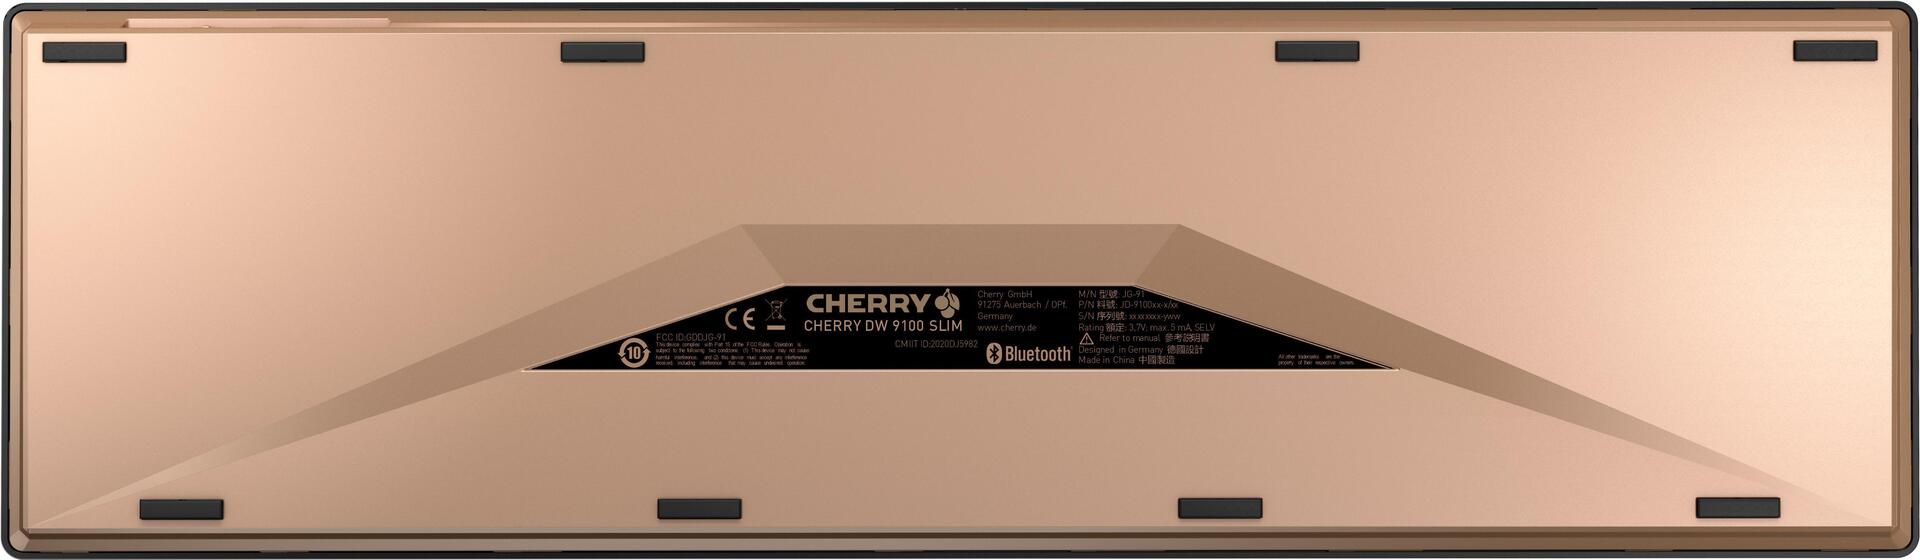 CHERRY DW 9100 SLIM (JD-9100FR-2)